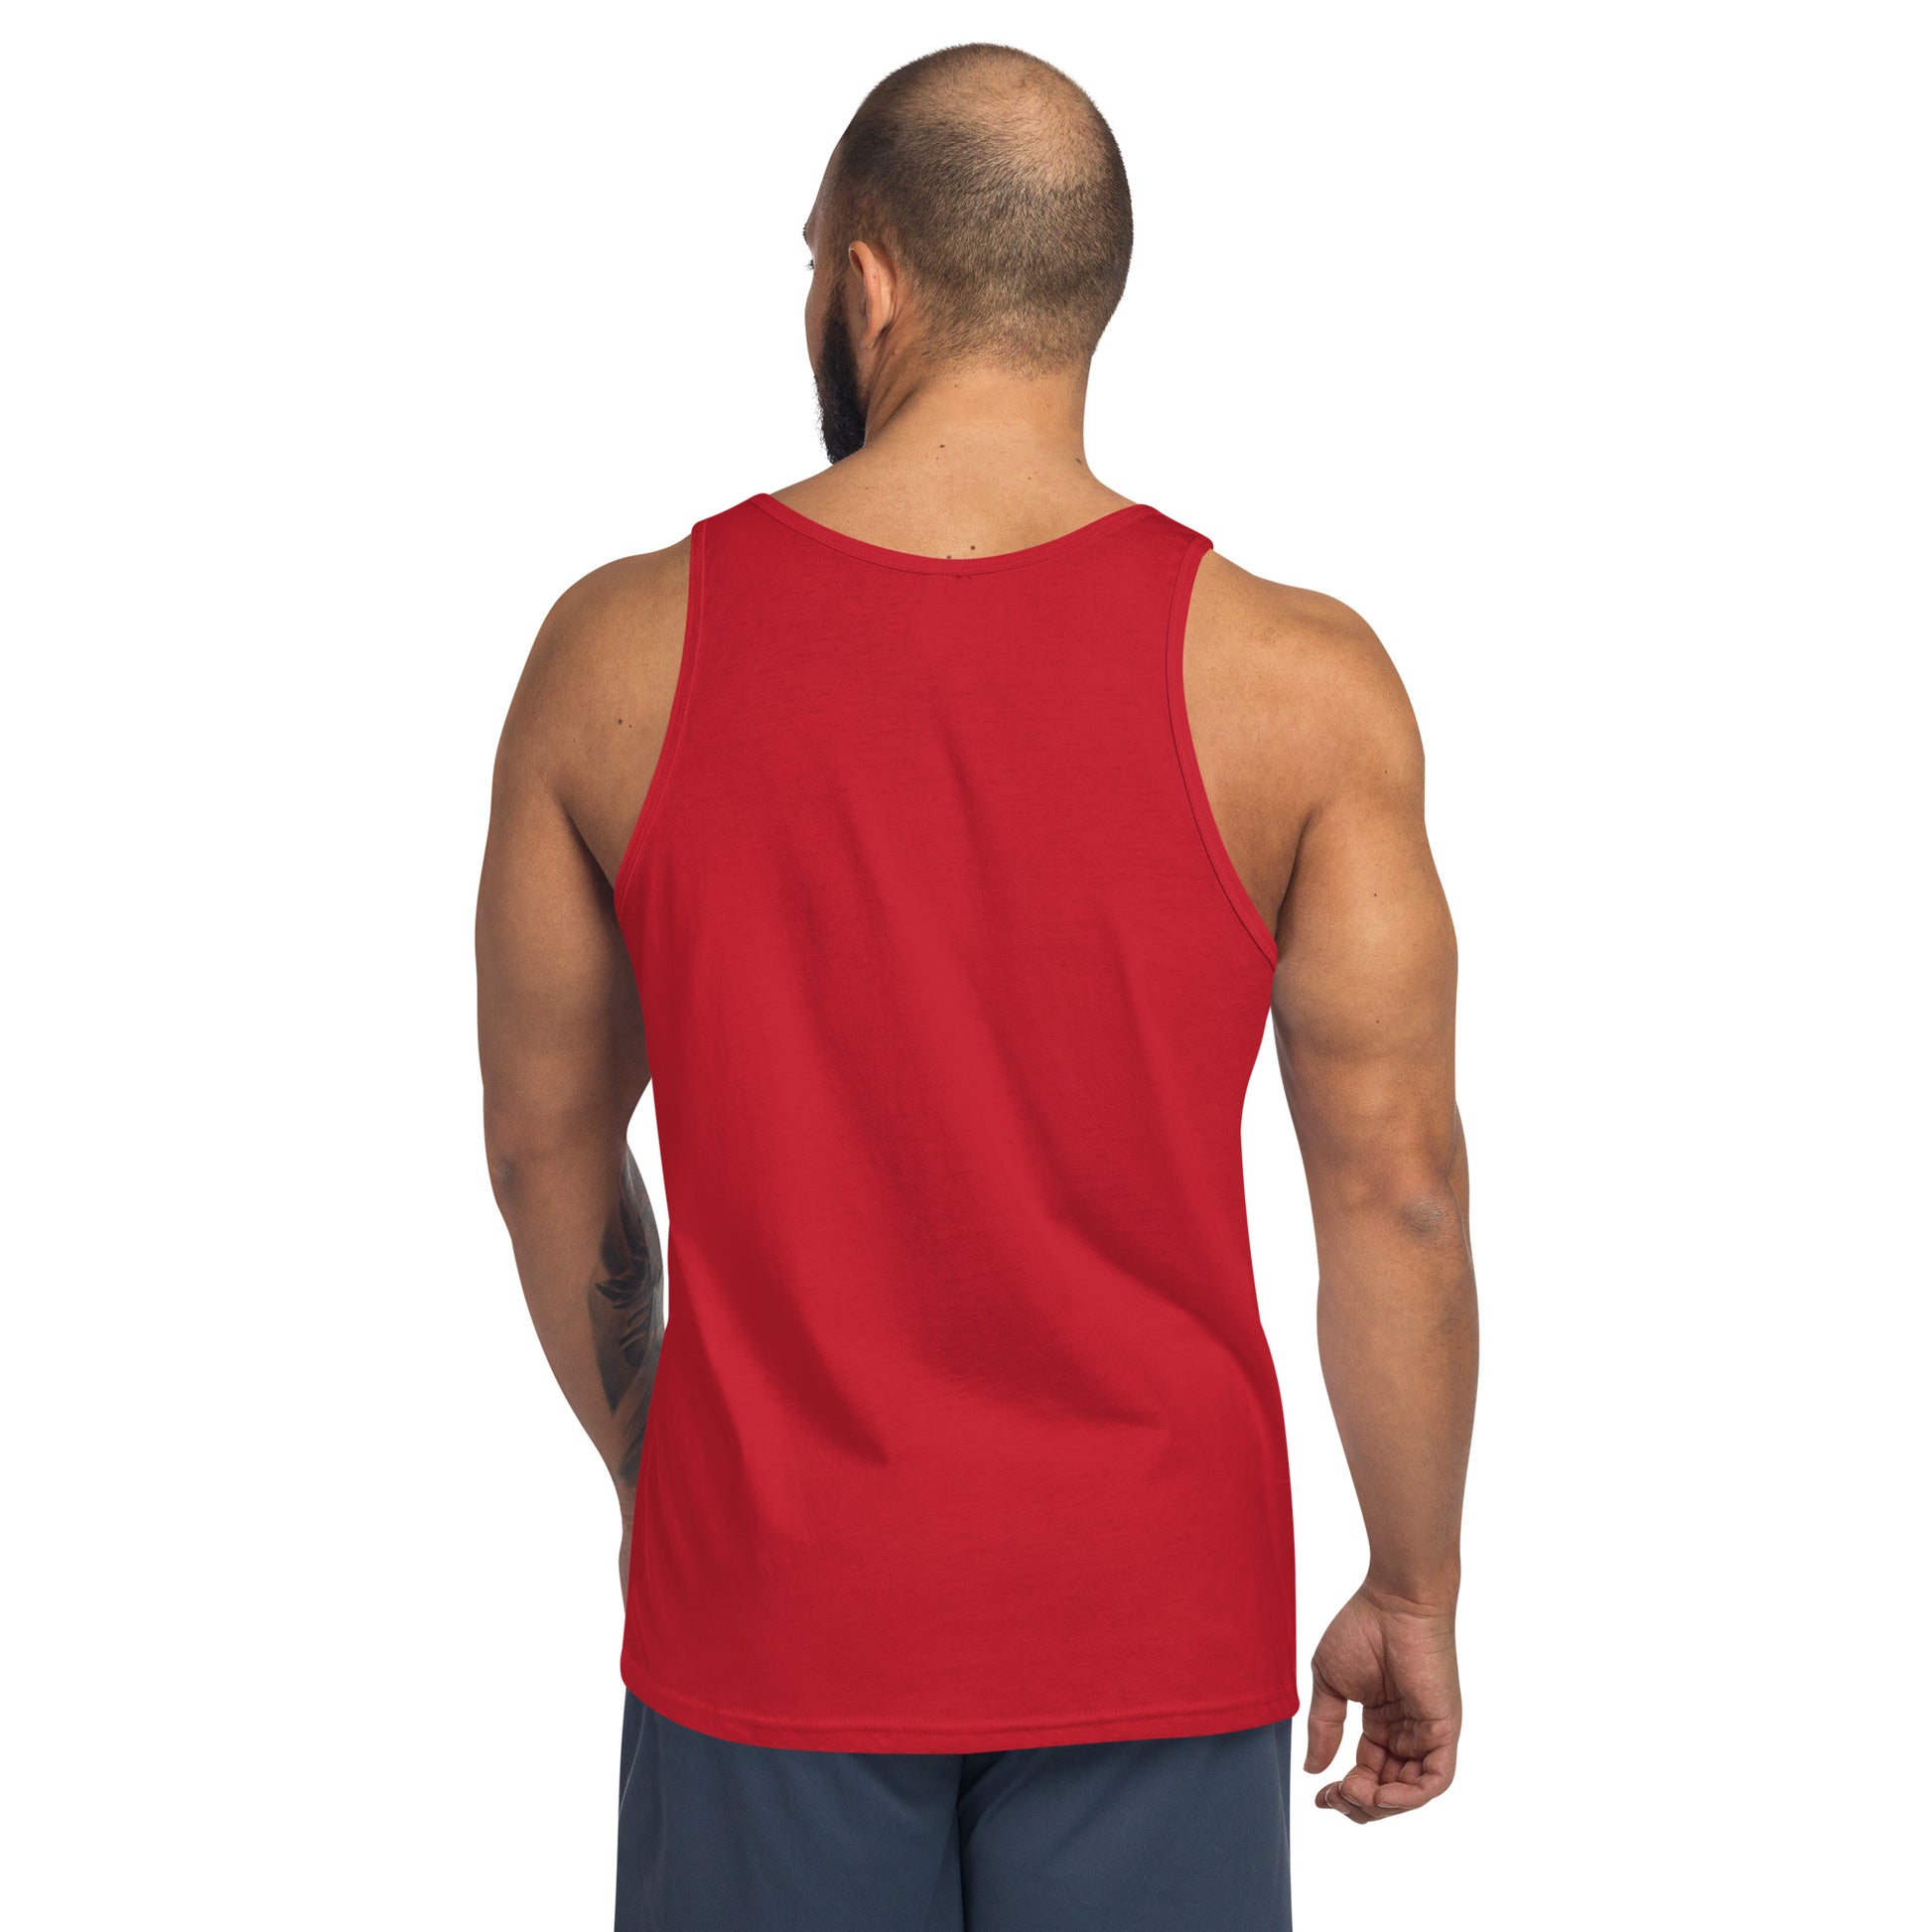 Men's Tank Top - Body Like This - FAFO Sportswear